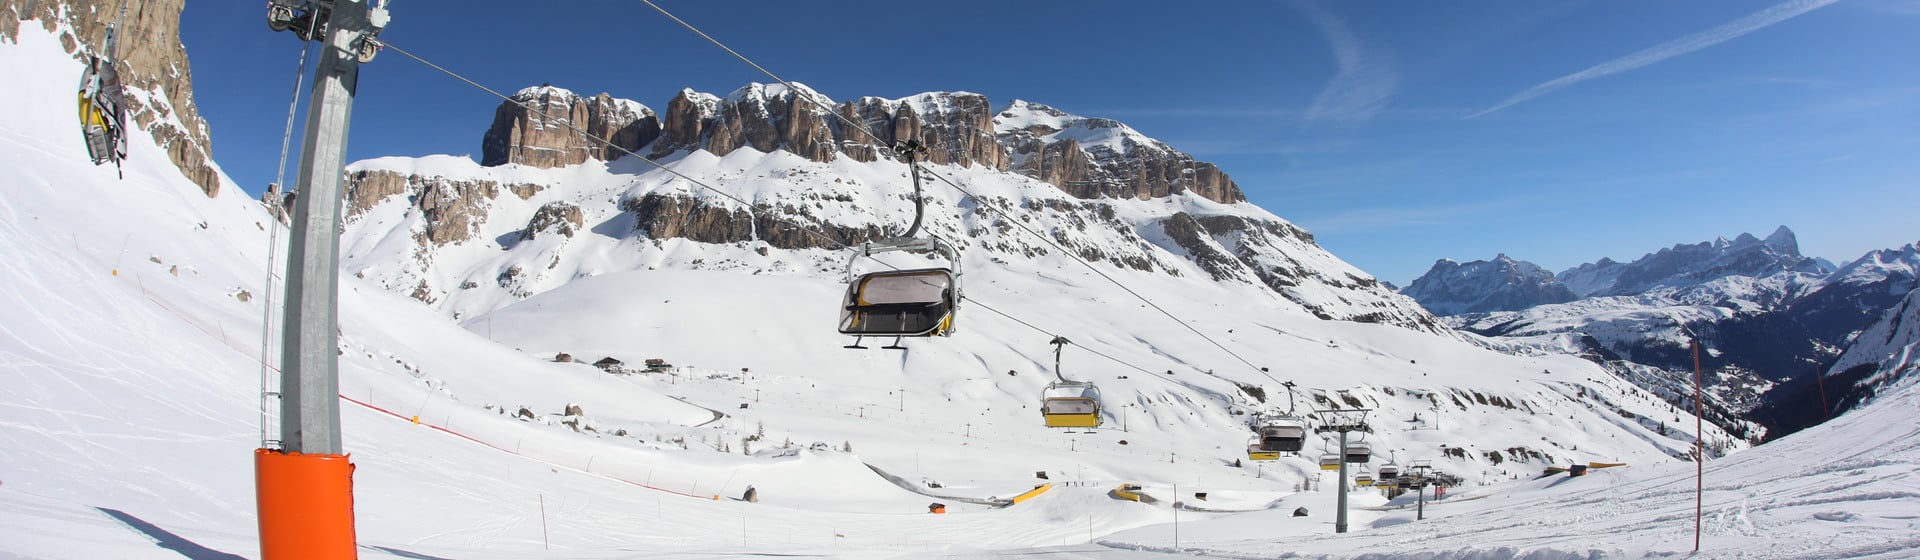 Winter News 2018/2019 in Arabba-Marmolada Skiarea